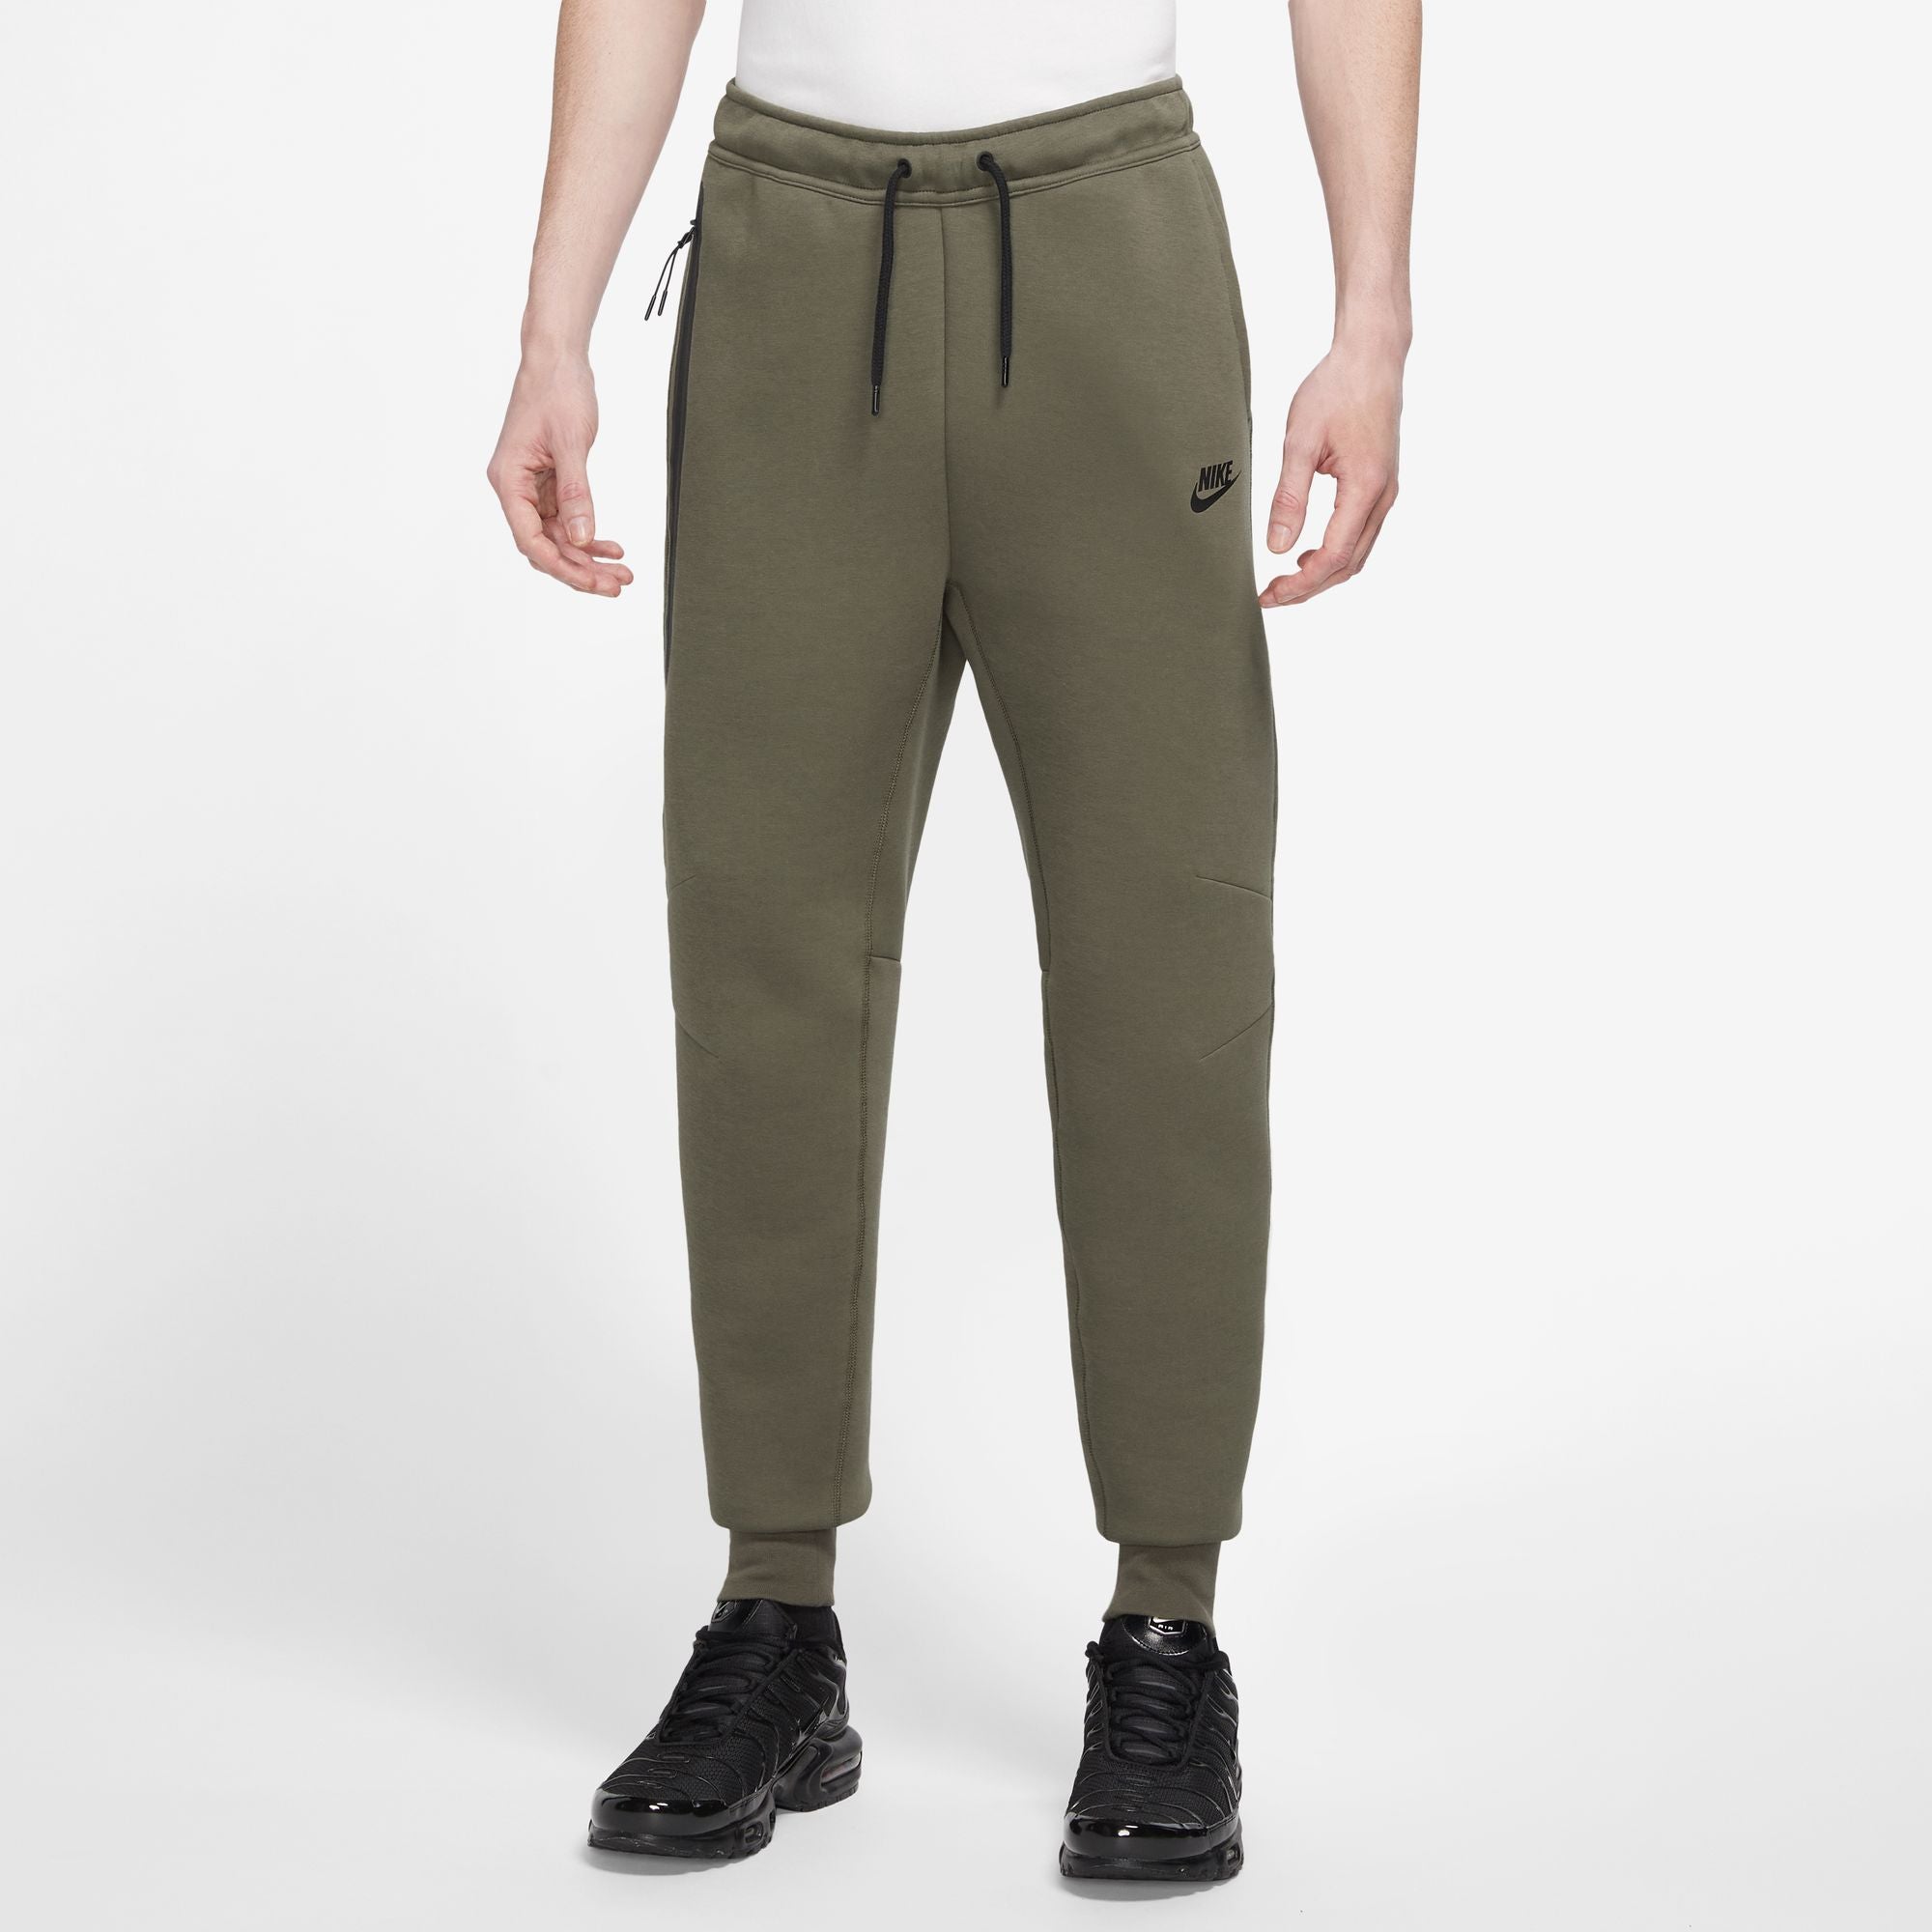 Reebok High Quality Olive Green Logo Sweatpants With Pockets XXL